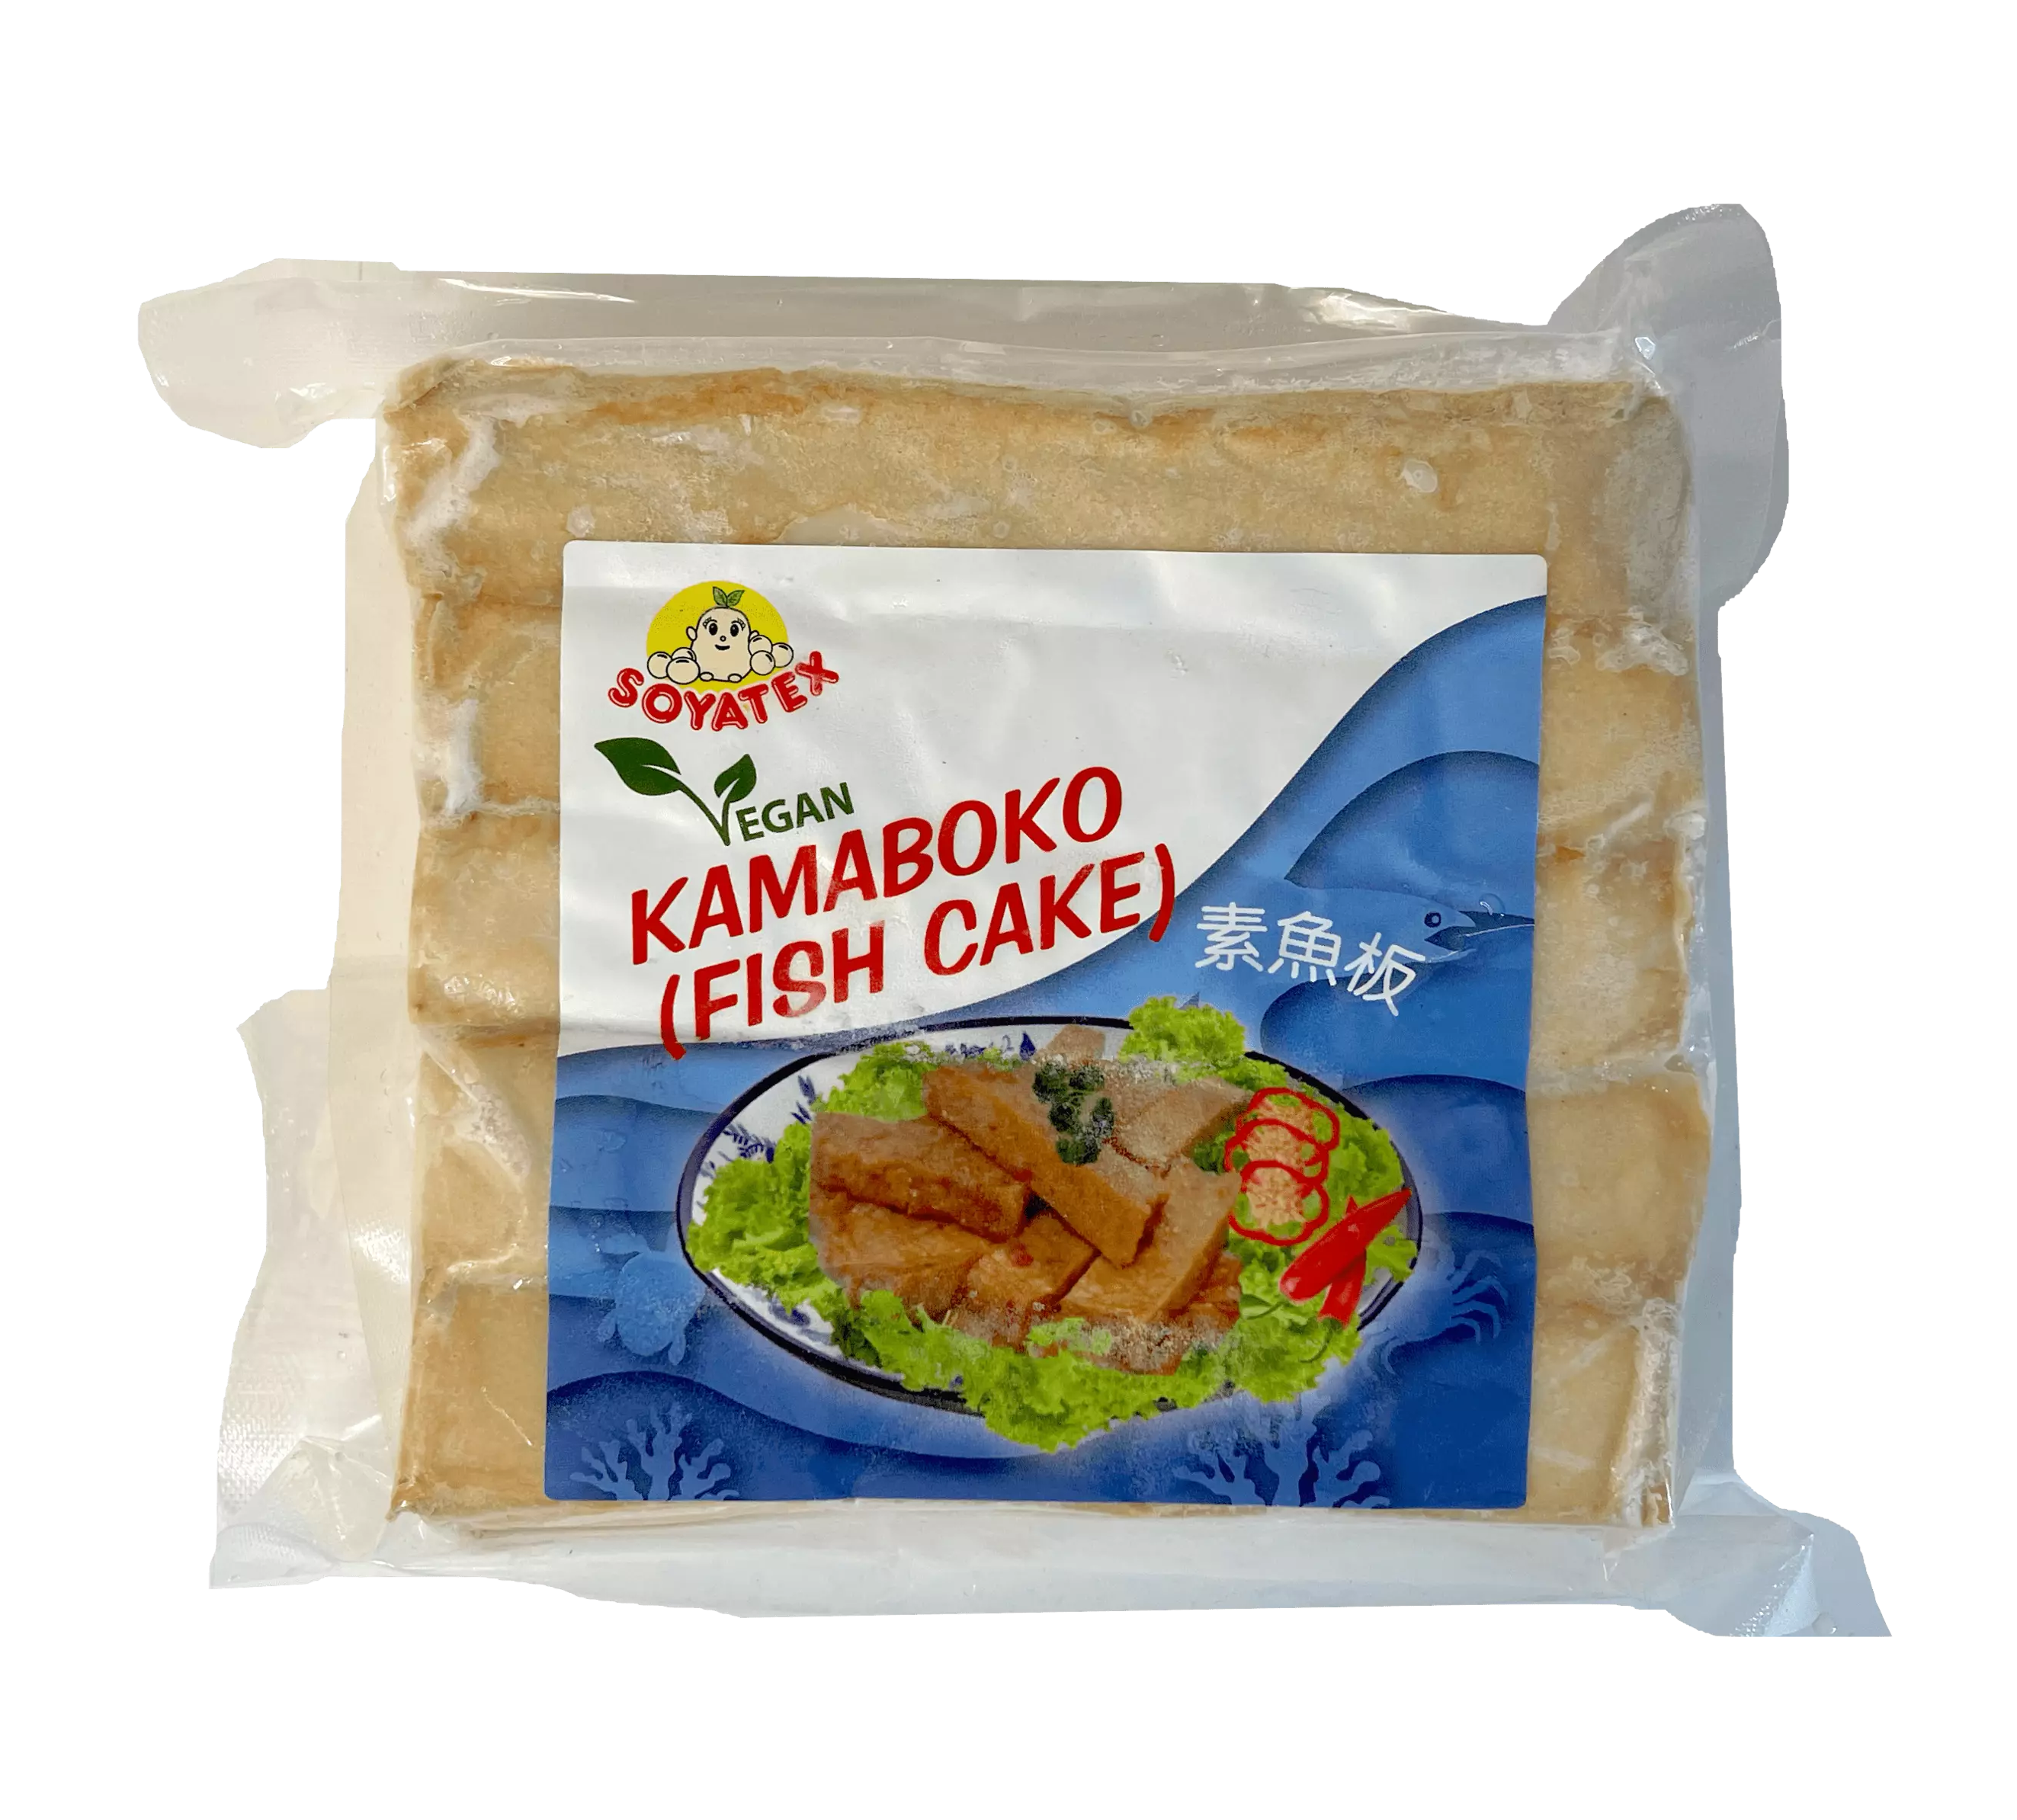 Vegan Kamaboko/Fish Cake Frozen 454g Soyatex Malaysia